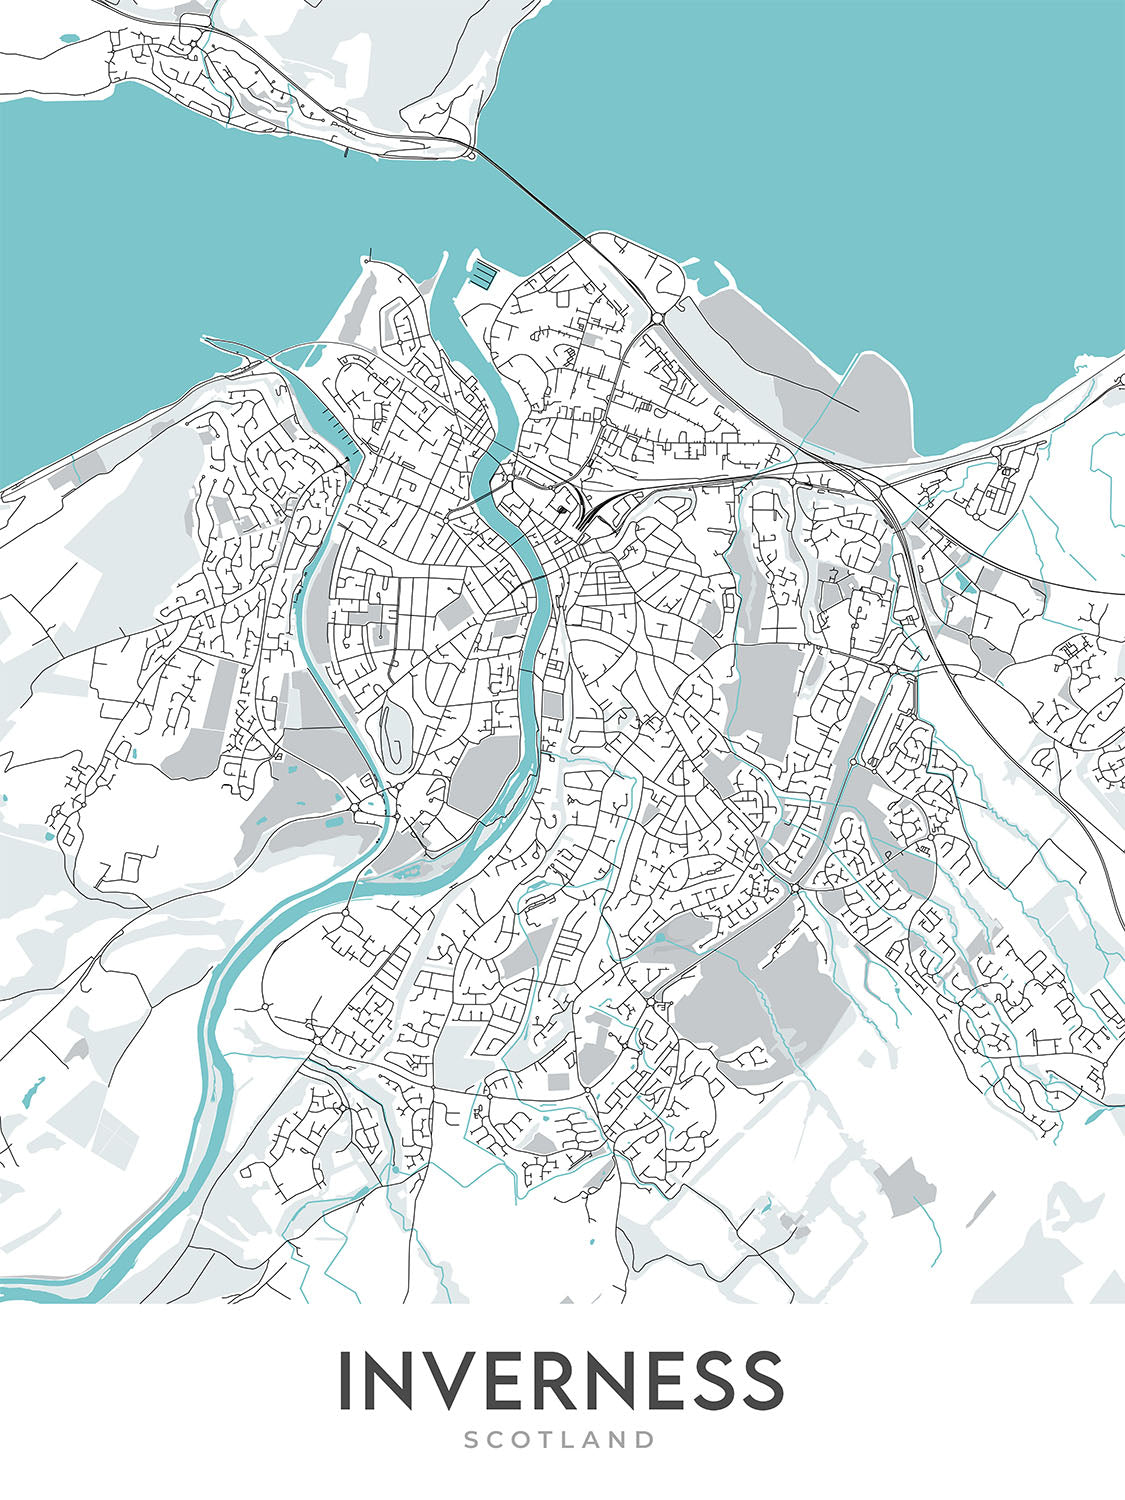 Modern City Map of Inverness, Scotland: City Centre, River Ness, A82, Inverness Castle, Ness Islands